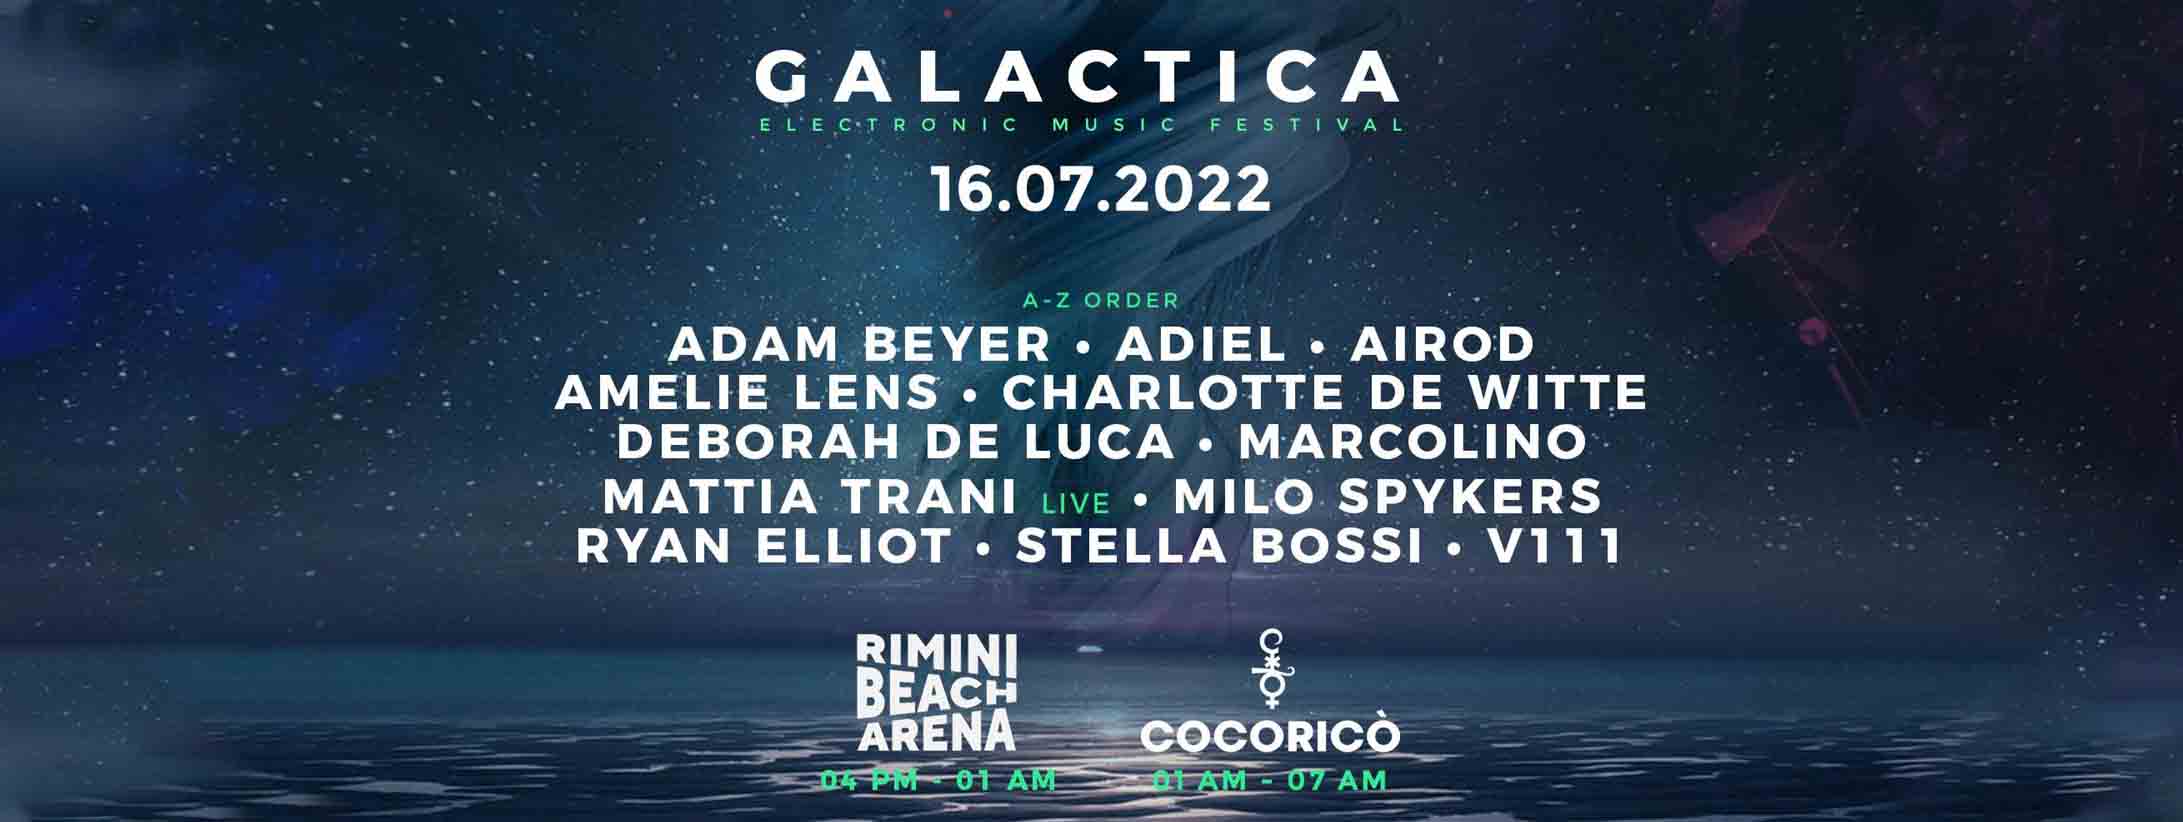 galactica -rimini-beach-arena-cocorico